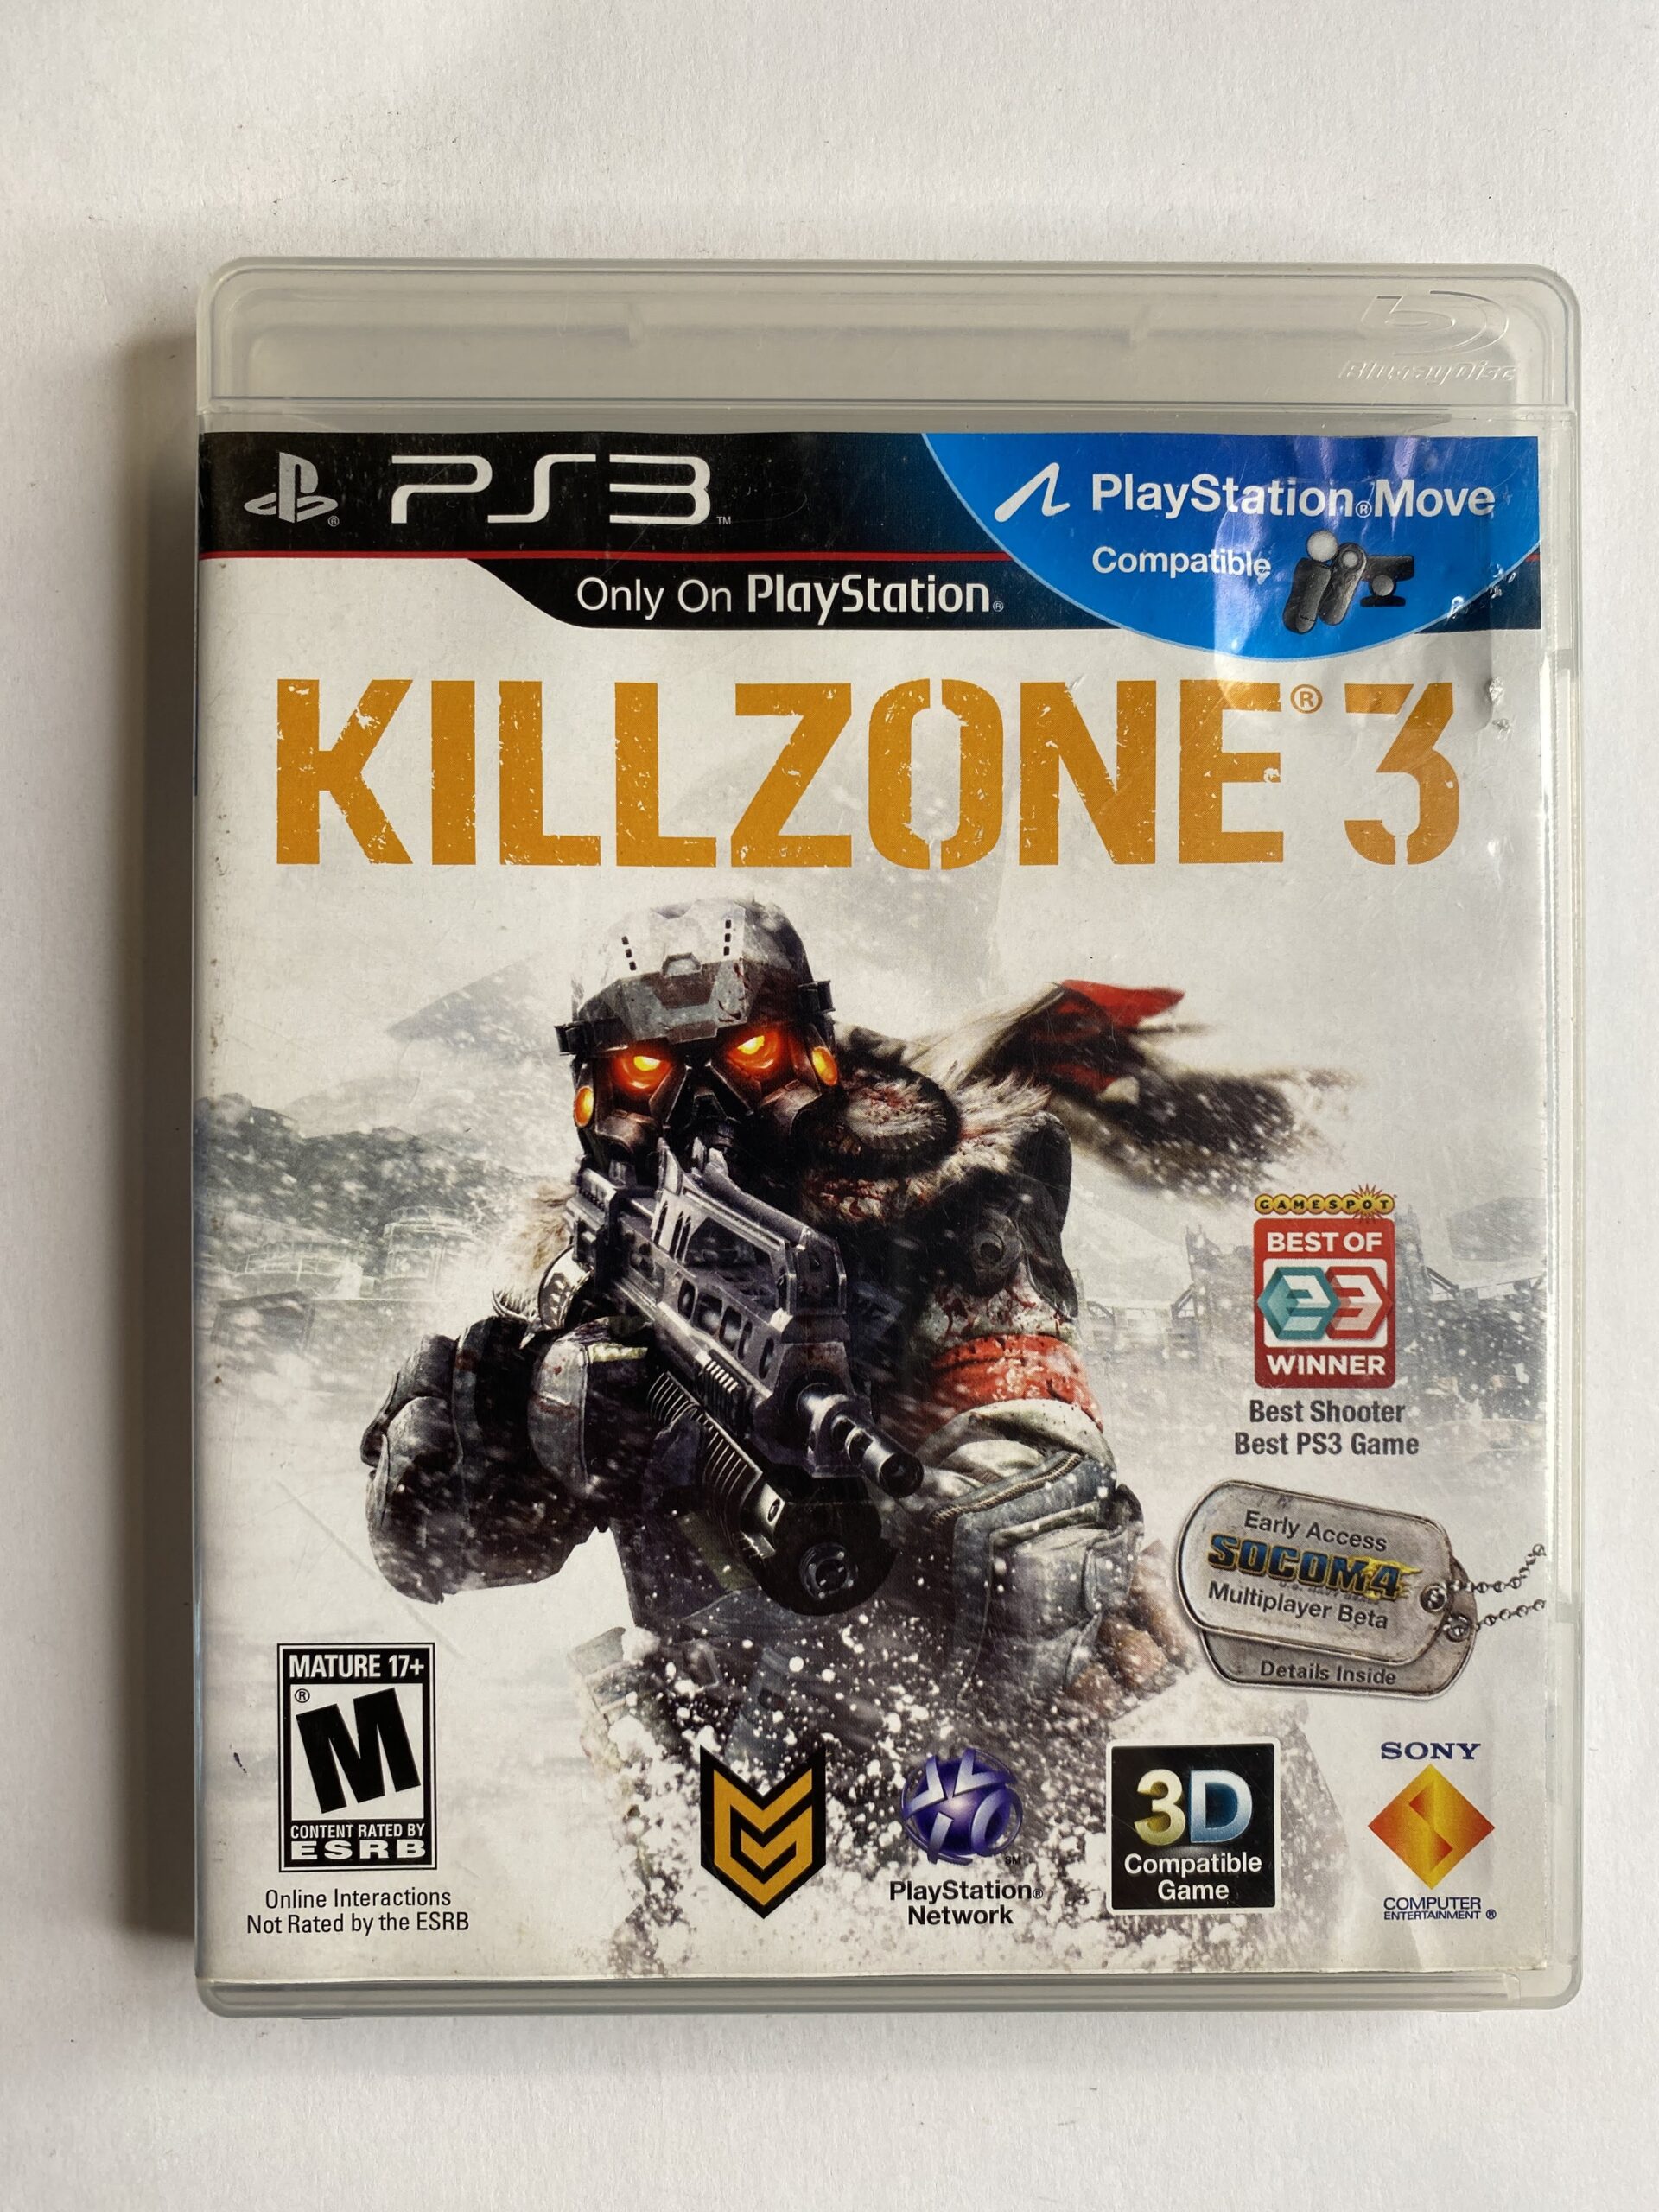 Killzone - GameSpot